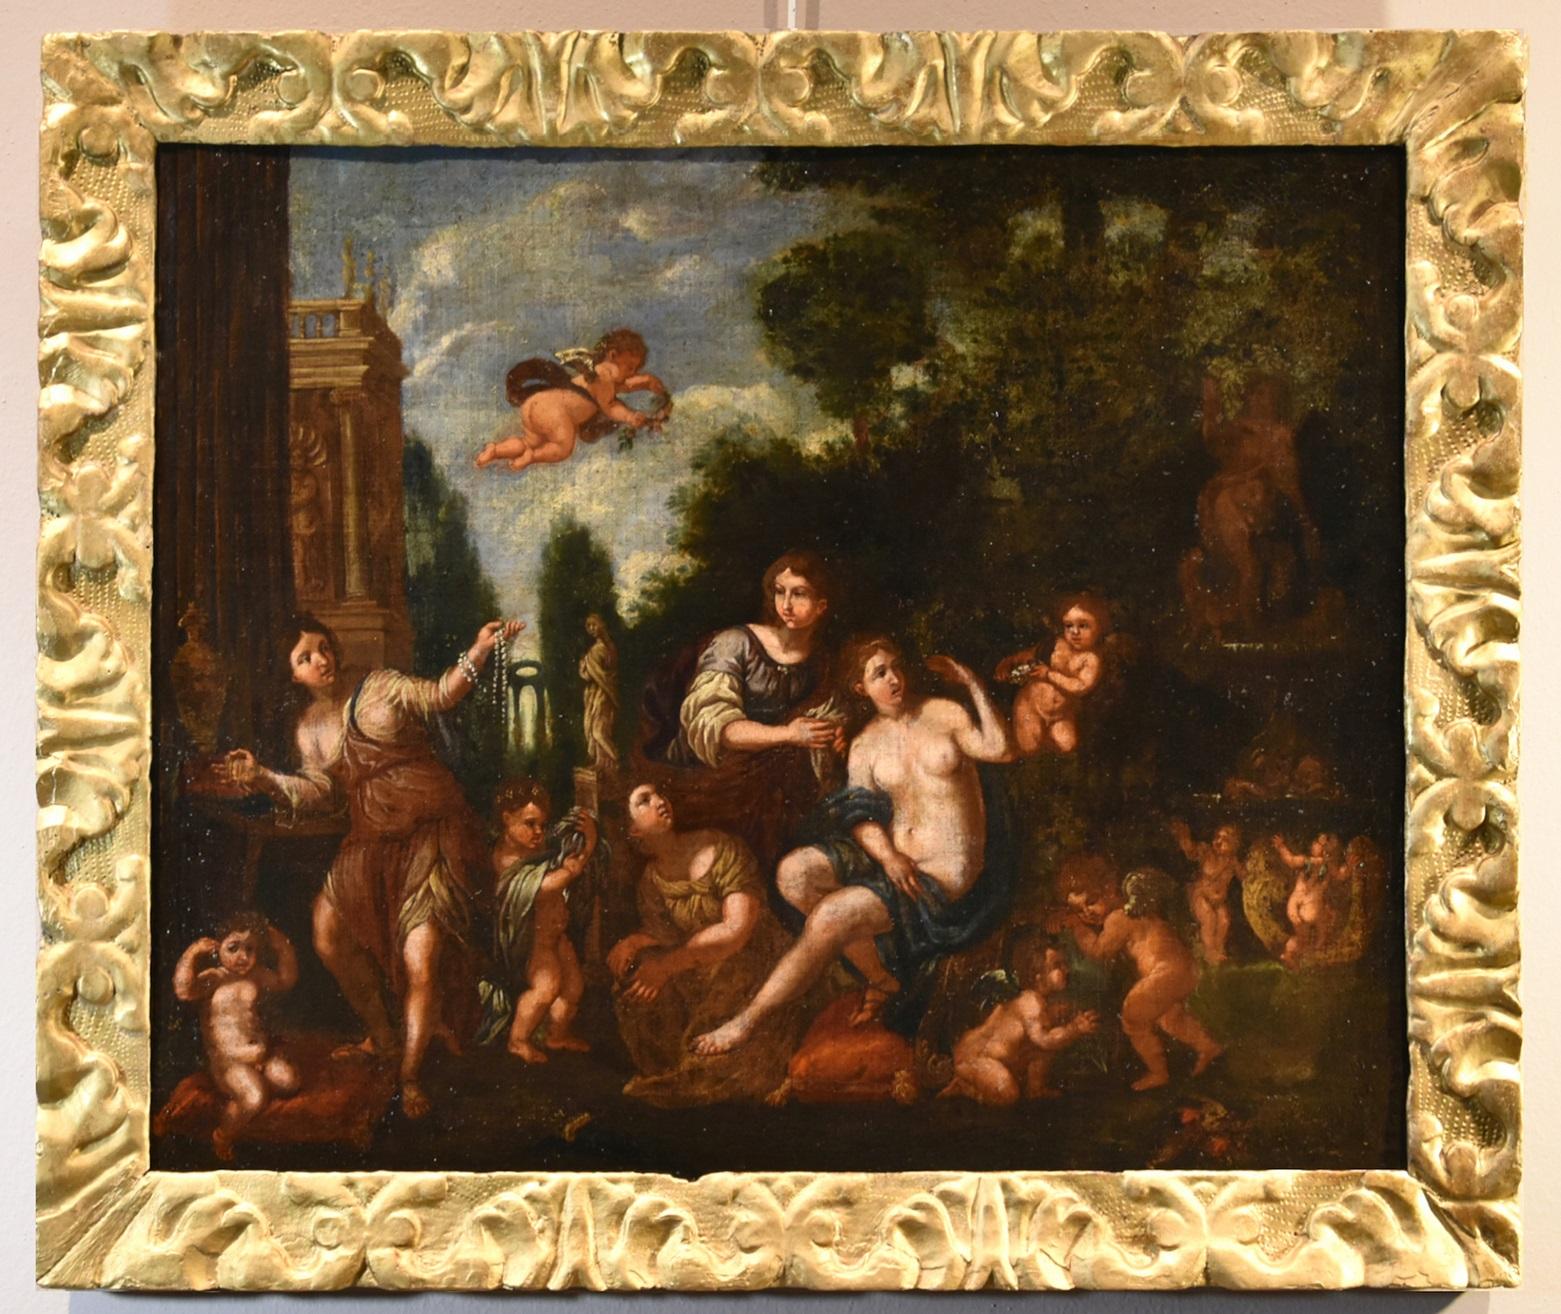 Toeletta Albani, mythologische Malerei, Öl auf Leinwand, 17. Jahrhundert, Alter Meister, Italien – Painting von Francesco Albani (Bologna 1578 - 1660), workshop of